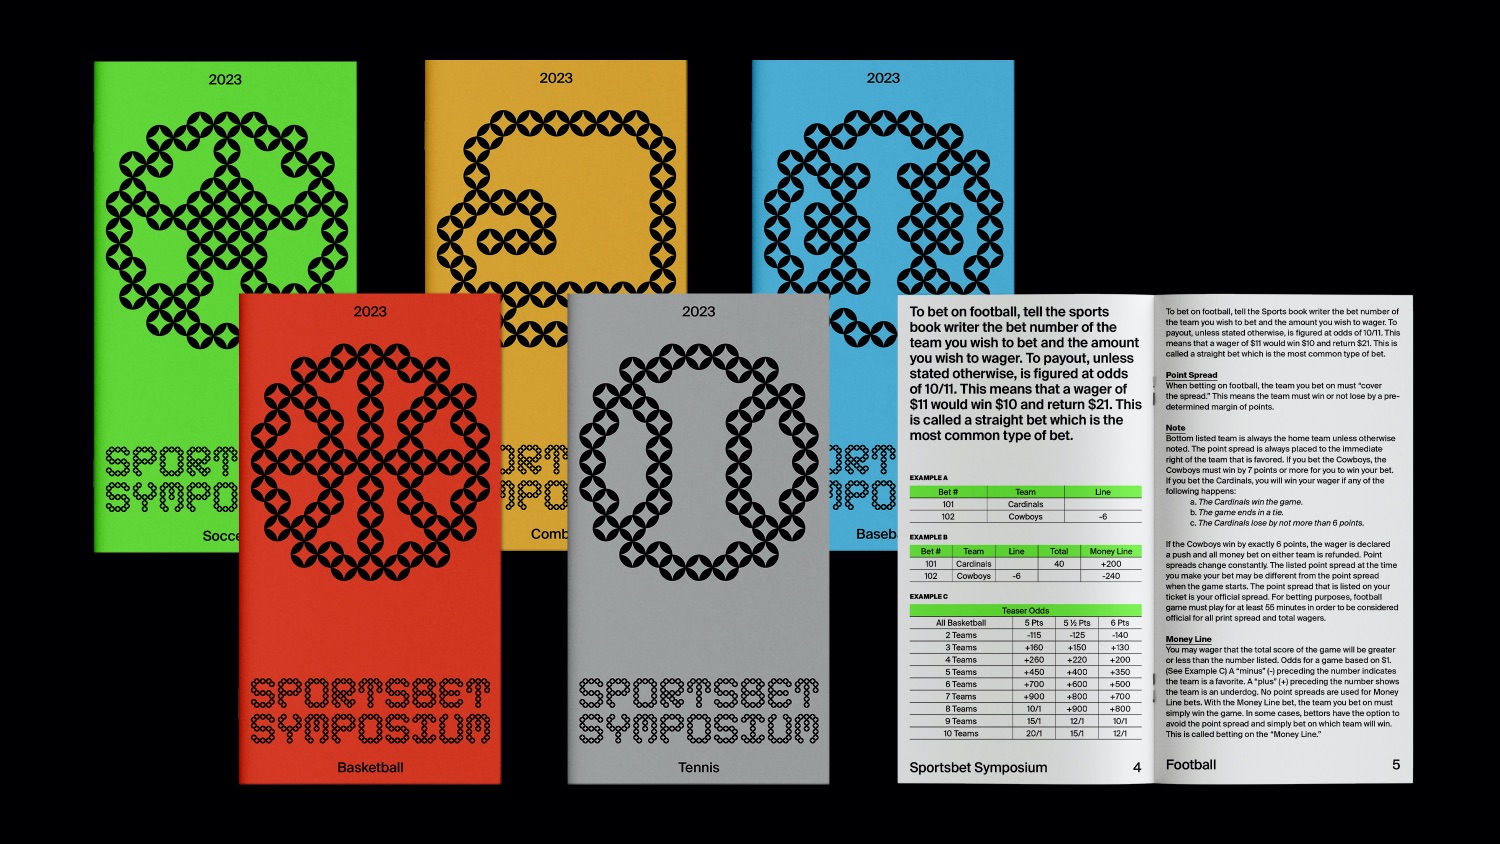 Sportsbet Symposium Brand Redesign Concept